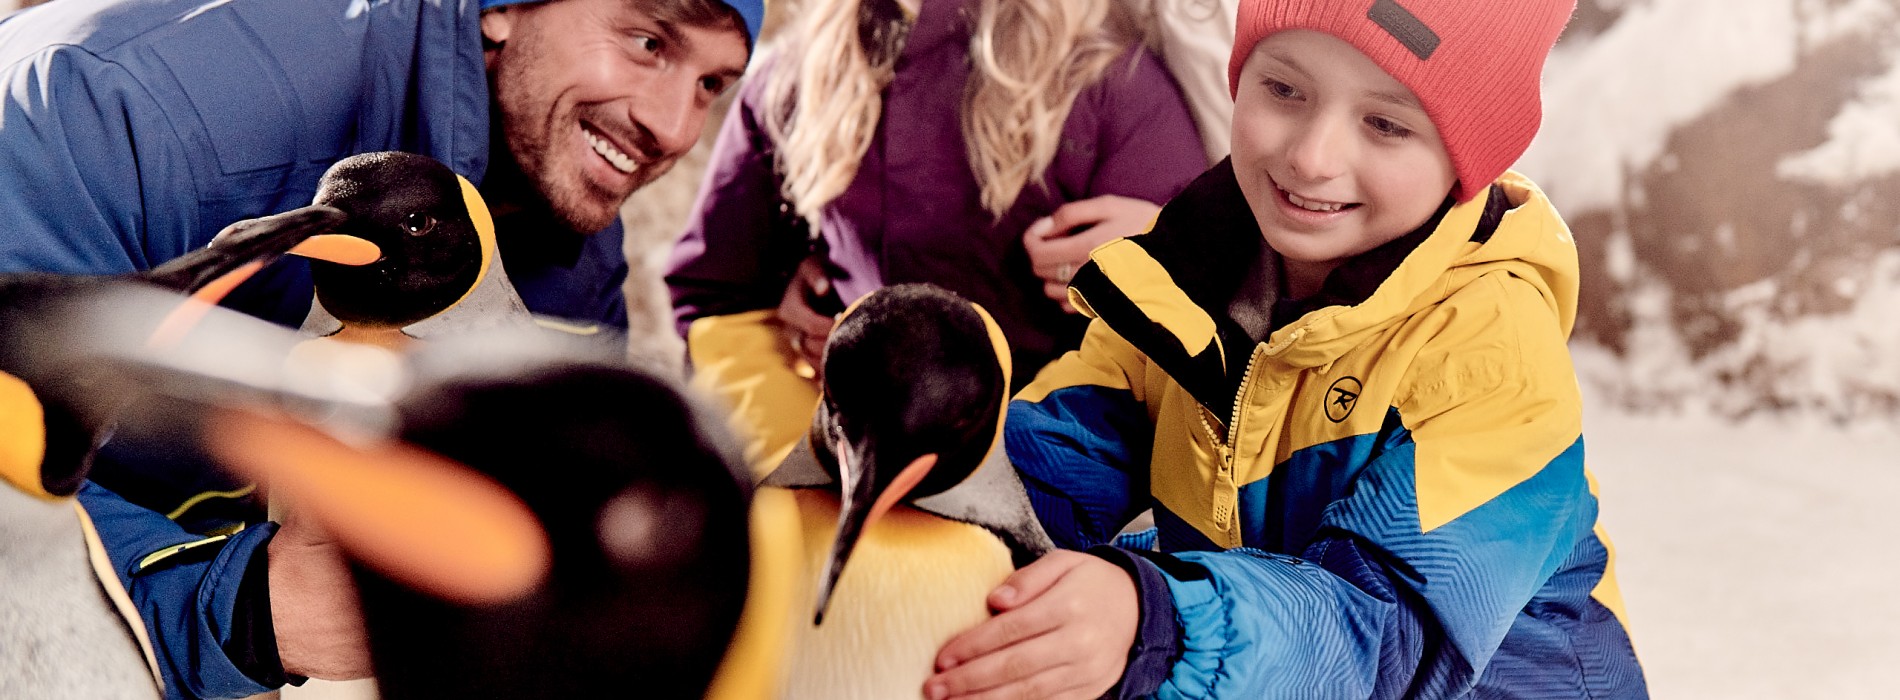 Ski Dubai celebrates over Six Years of Snow Penguins